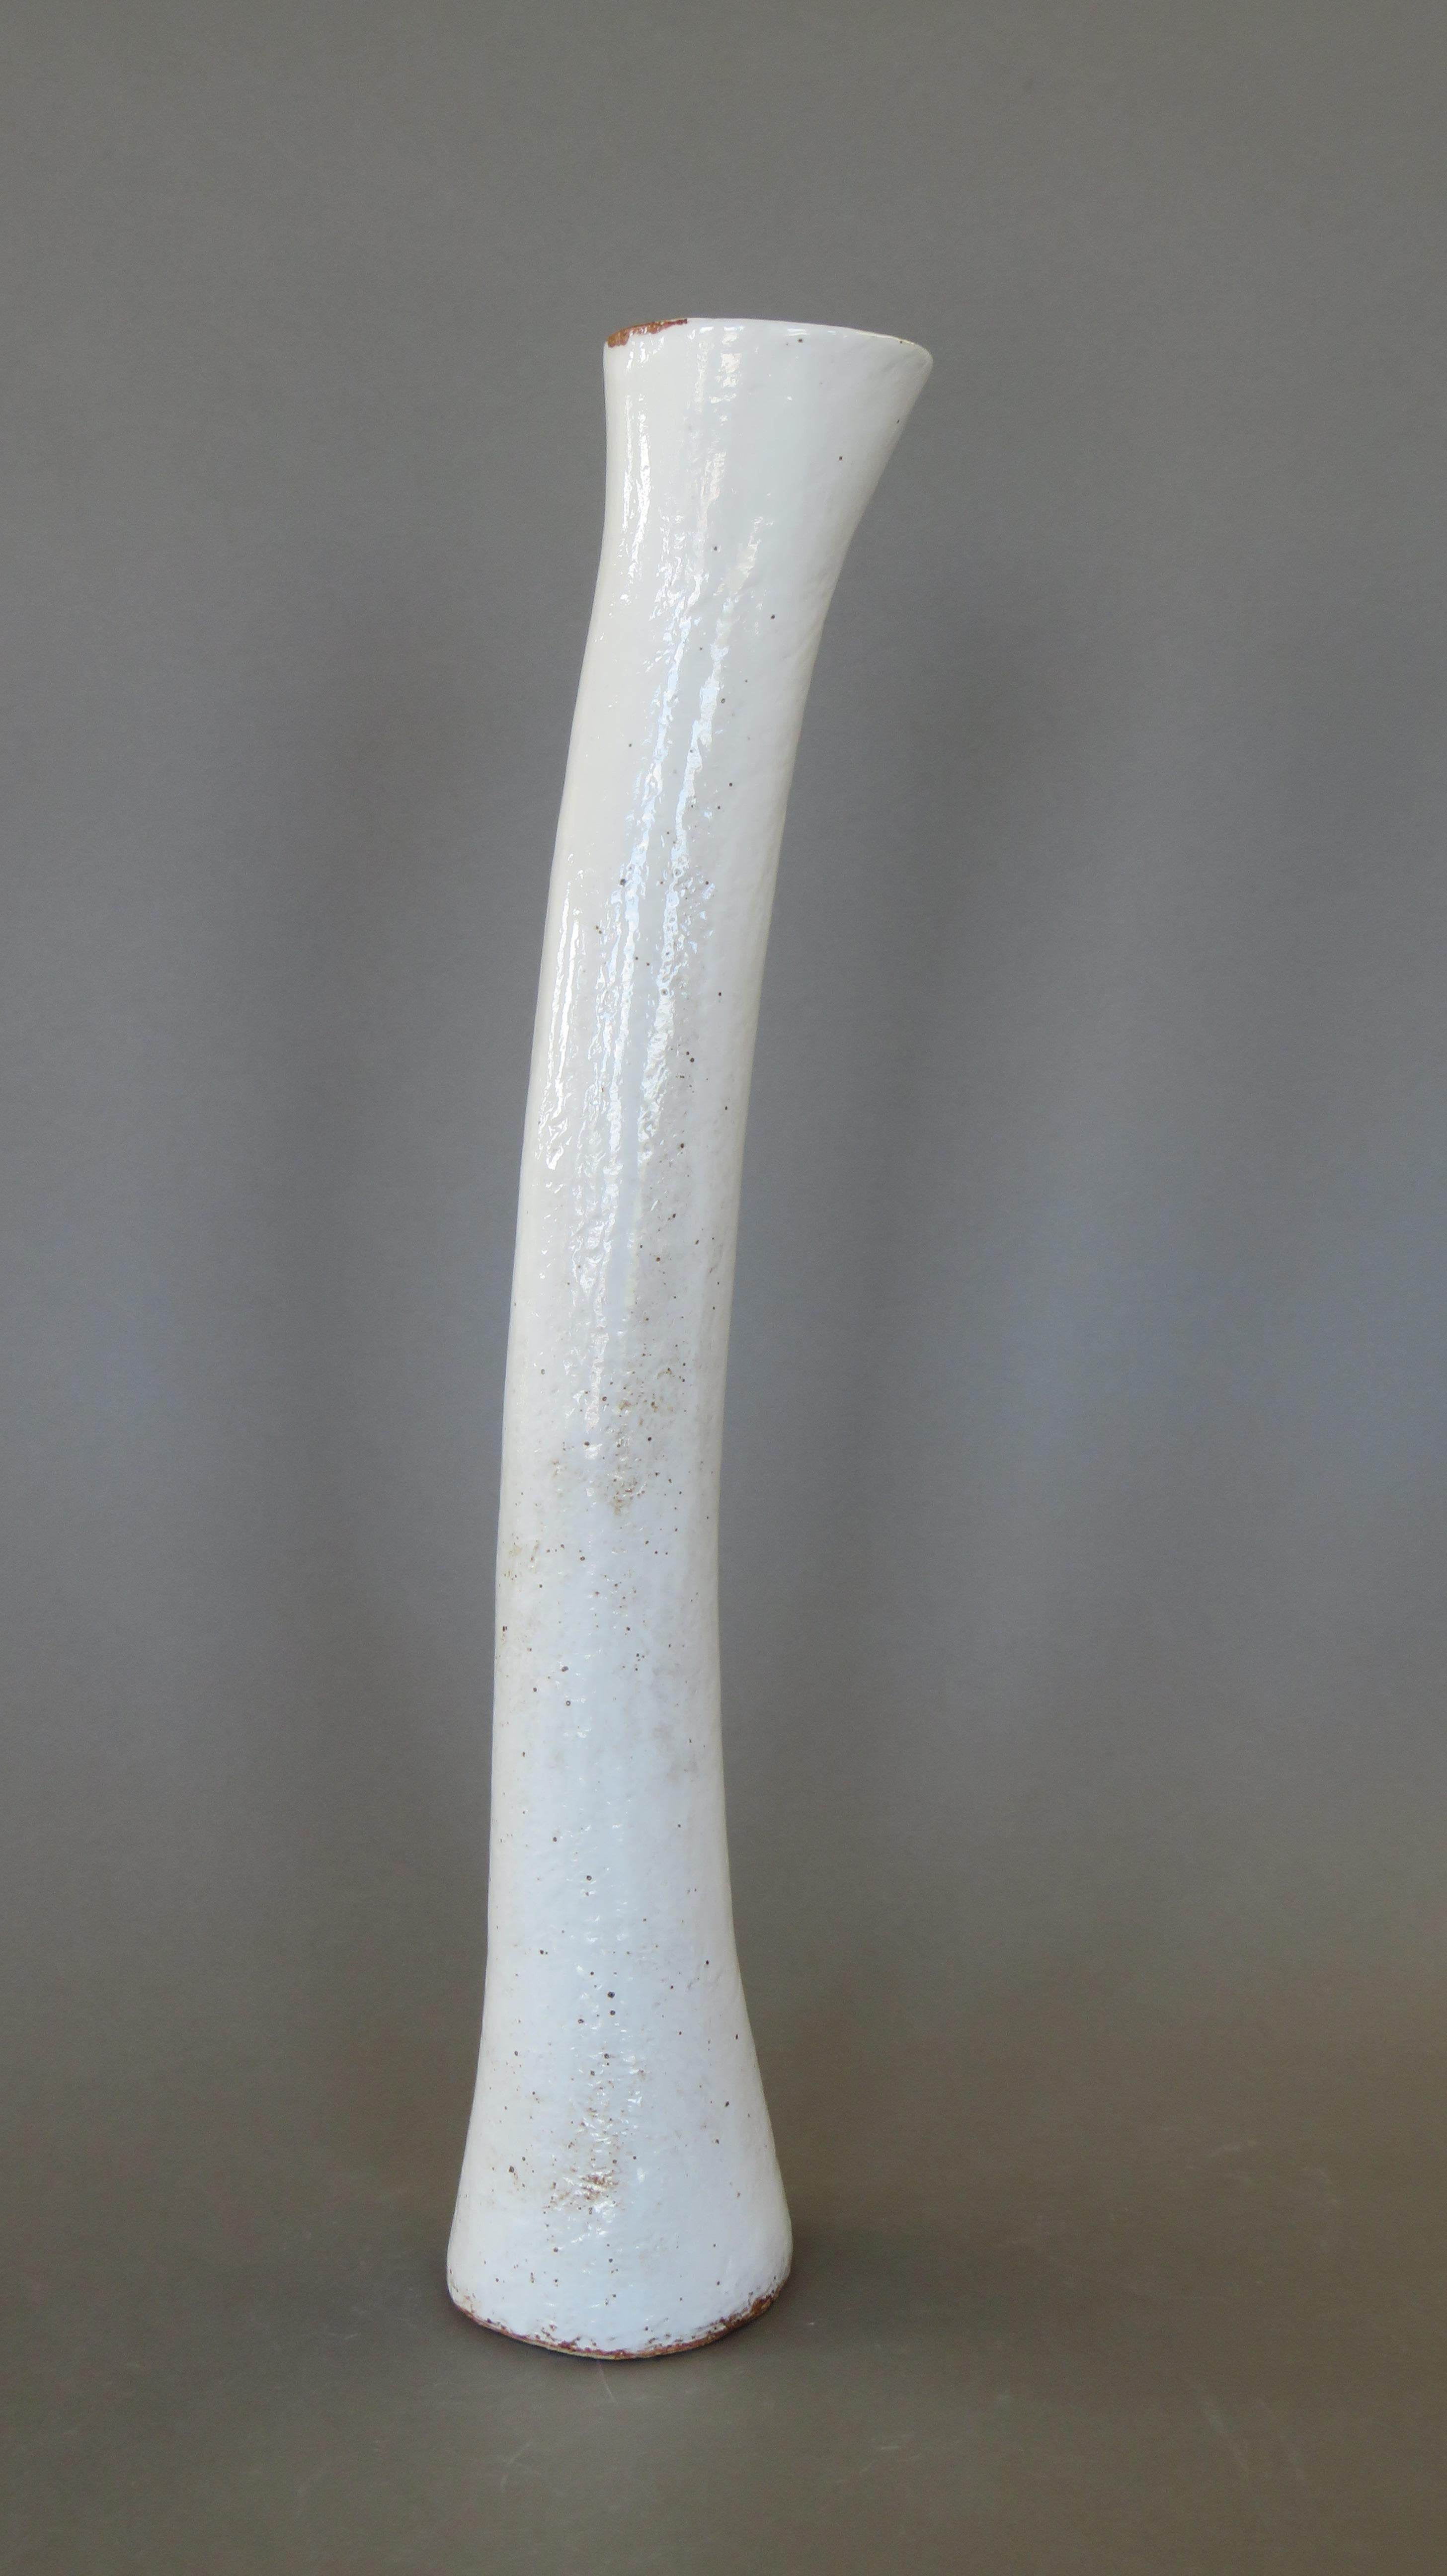 Tall Arcing Ceramic Vase, White Glaze with Brown Edge, Hand Built (Handgefertigt)